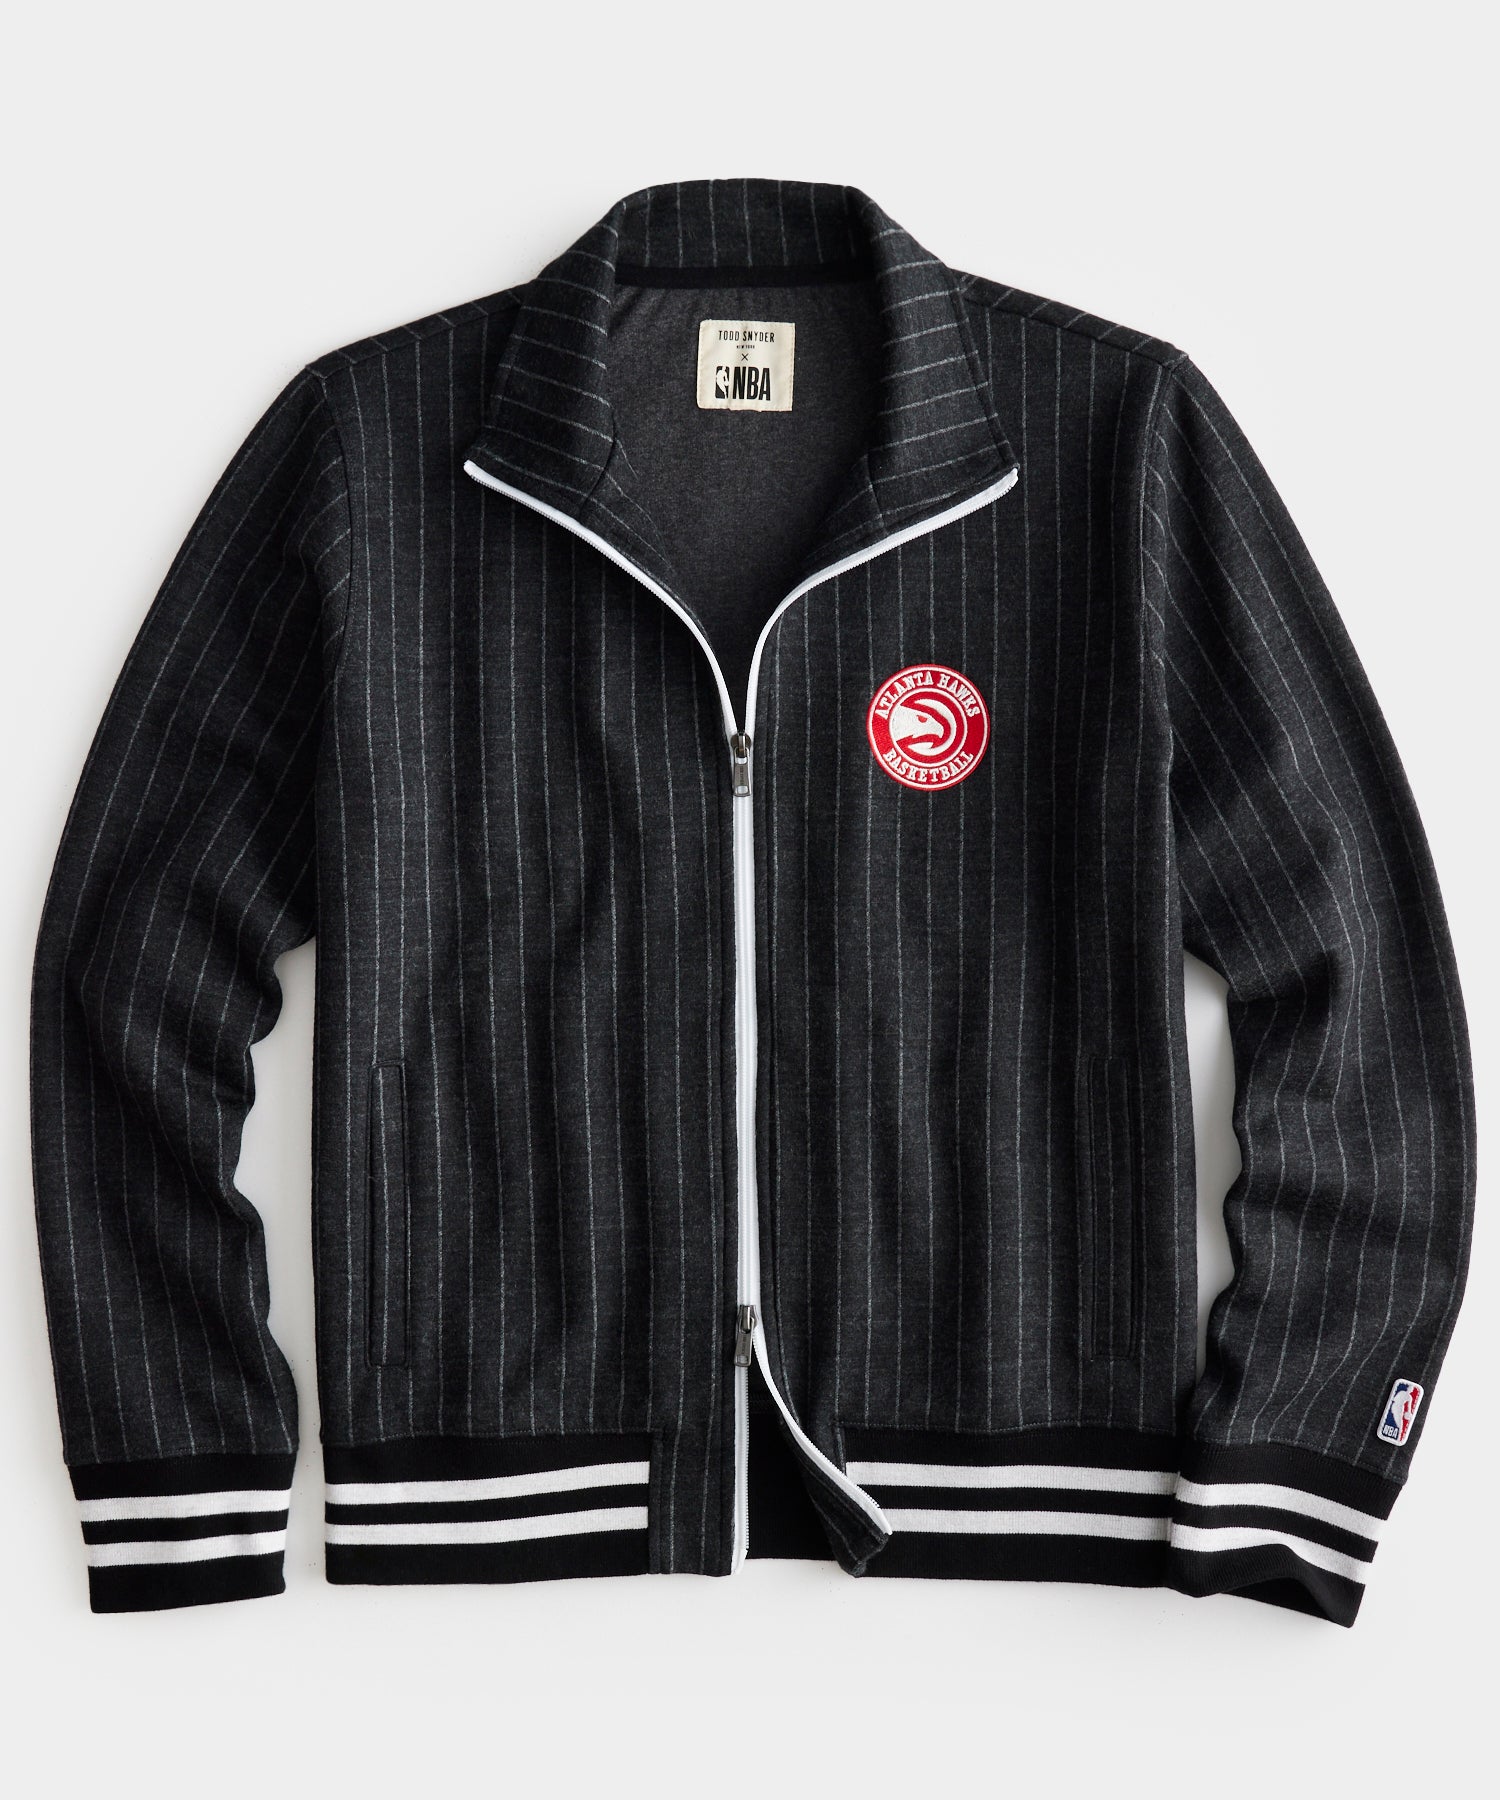 WW) Vintage Nike Team Nike Atlanta Braves Red Black Jacket L Full